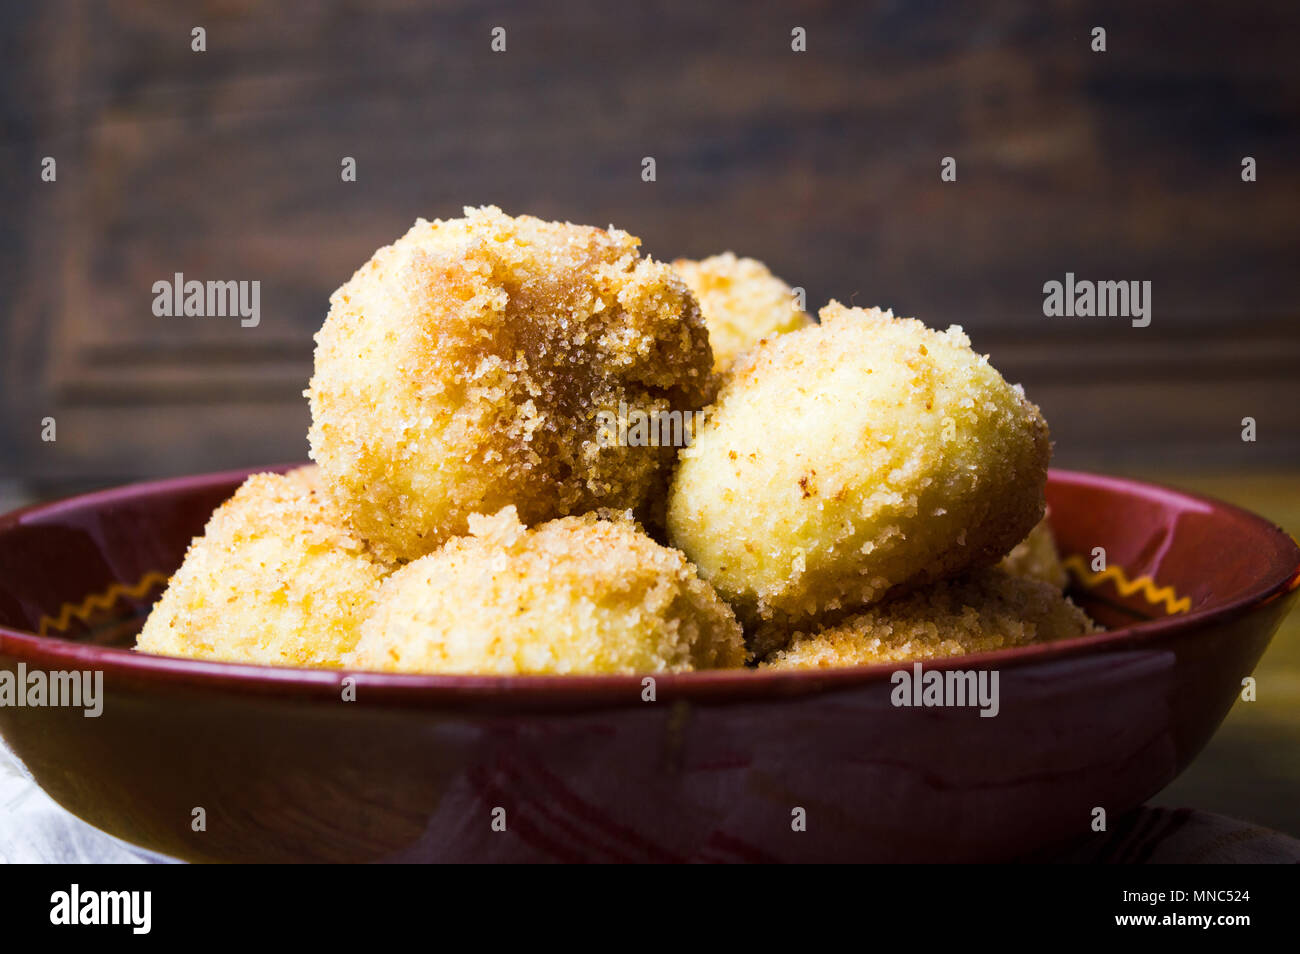 Bread crumb dumplings served in a bowl Stock Photo